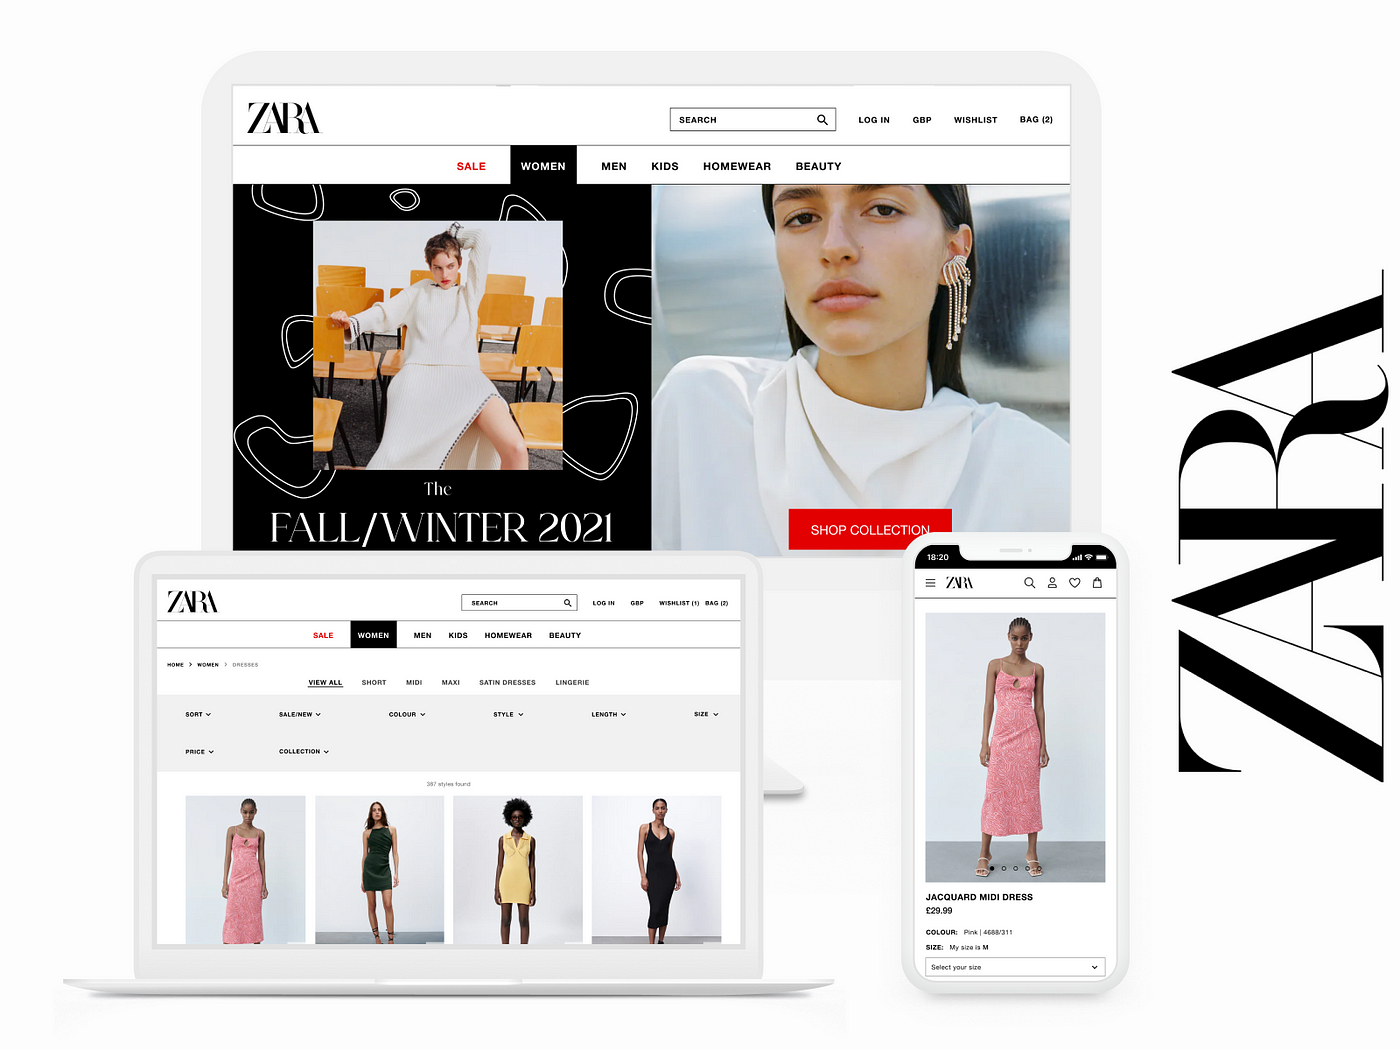 ZARA — An E-Commerce UX/UI Case Study, by Dominique S